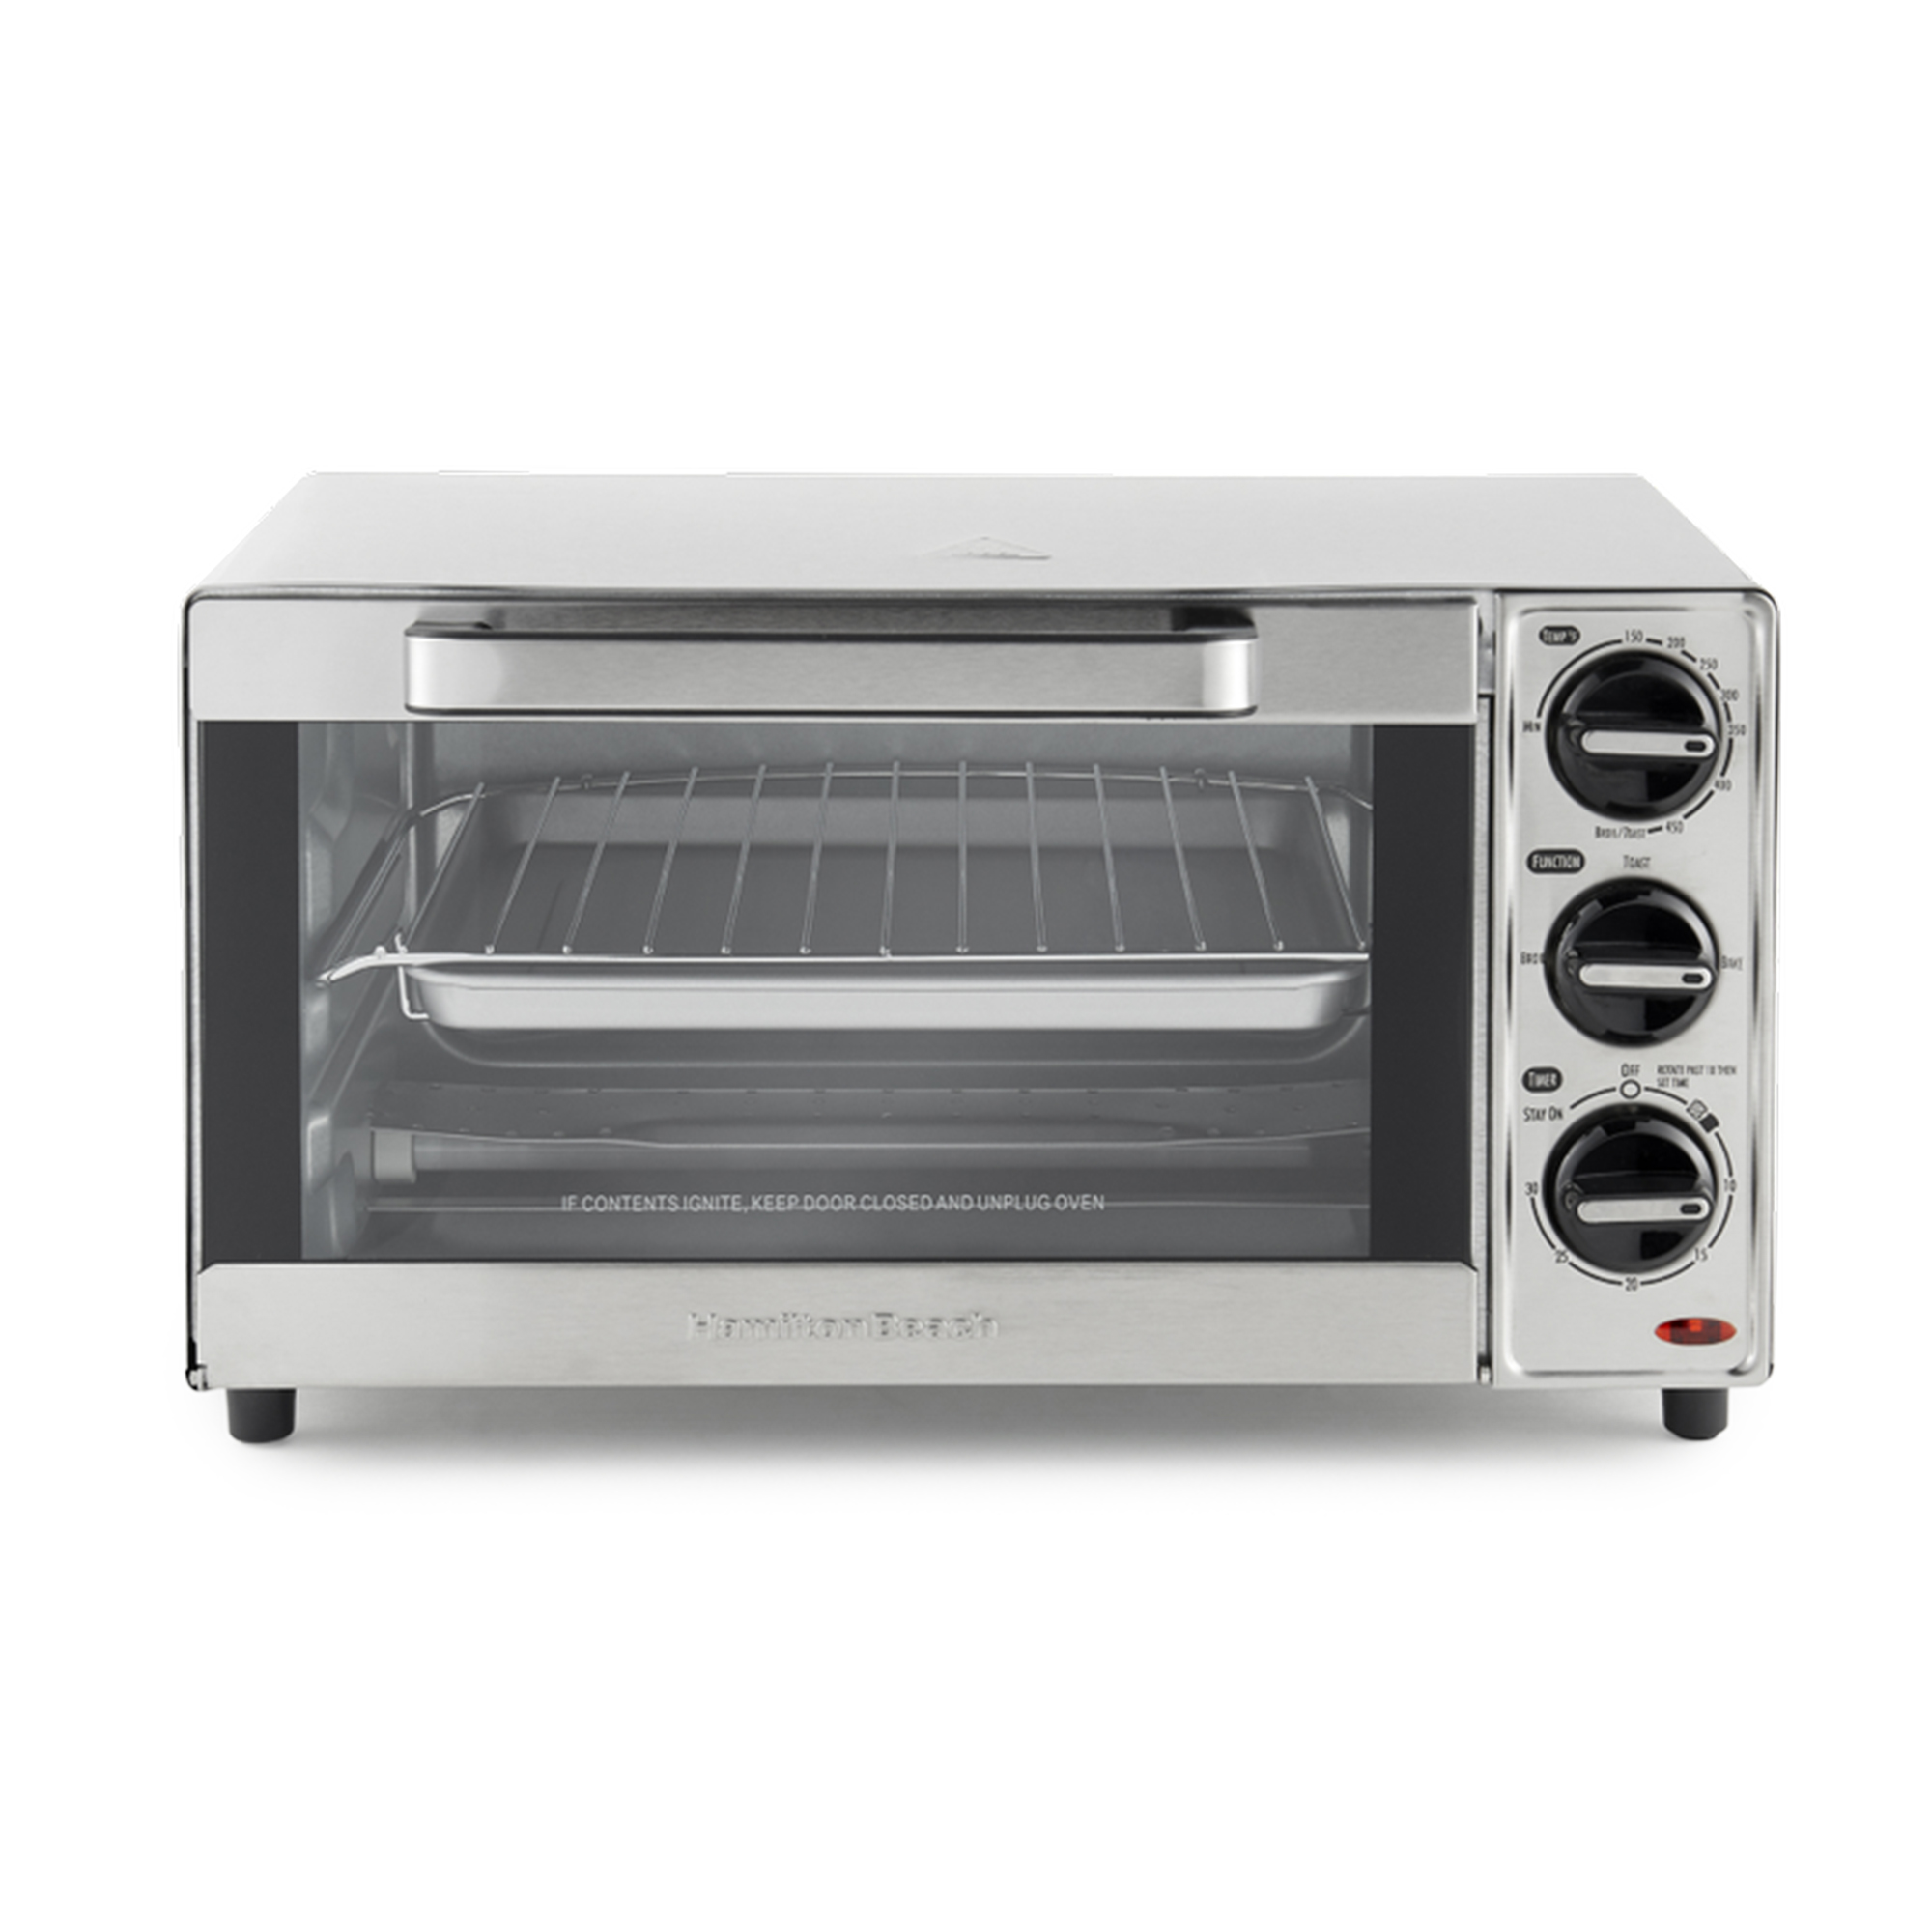 Hamilton Beach Countertop Toaster Oven | Model# 31401 - image 2 of 6